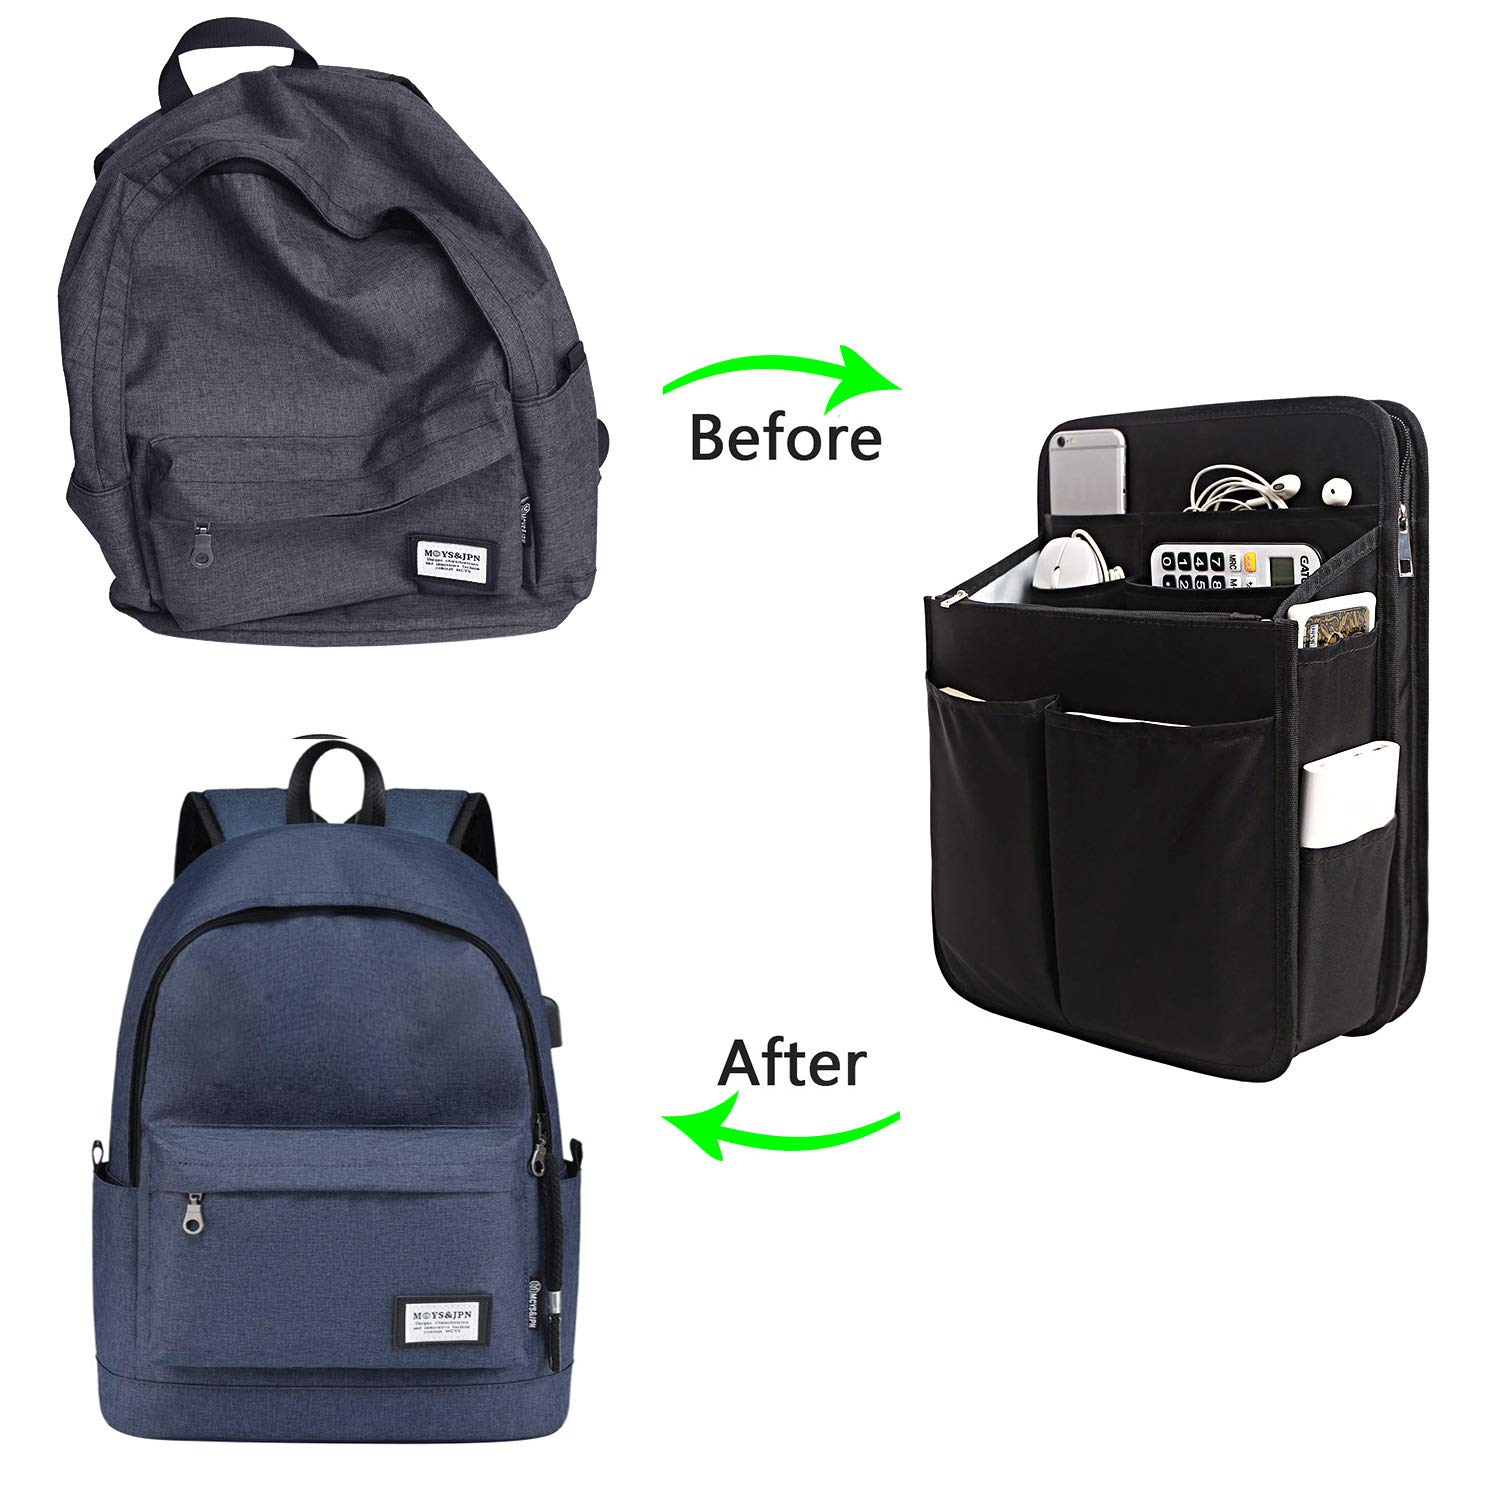 Yoillione Nylon Backpack Organizer Insert for Men and Women, Lightweight Travel Rucksack Insert with High Capacity, Large Bag Organizer with Zipper Pockets